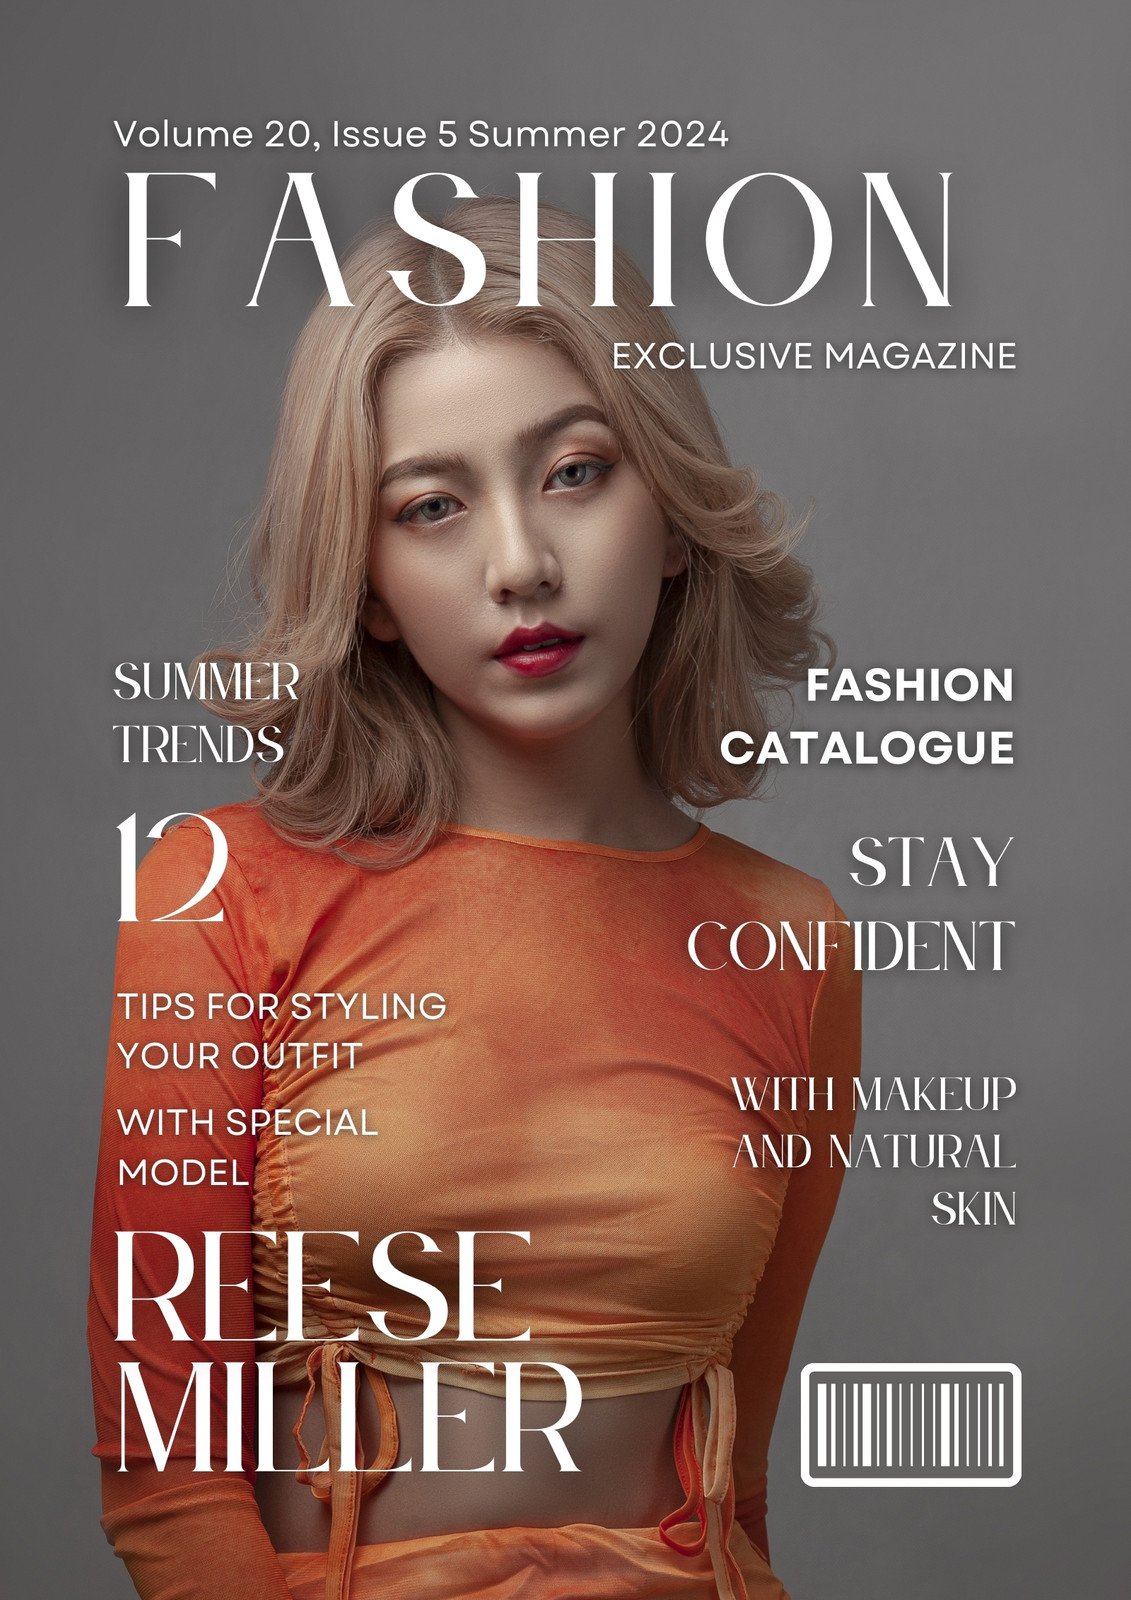 Gray & Orange Clean Minimalist Fashion Magazine Cover